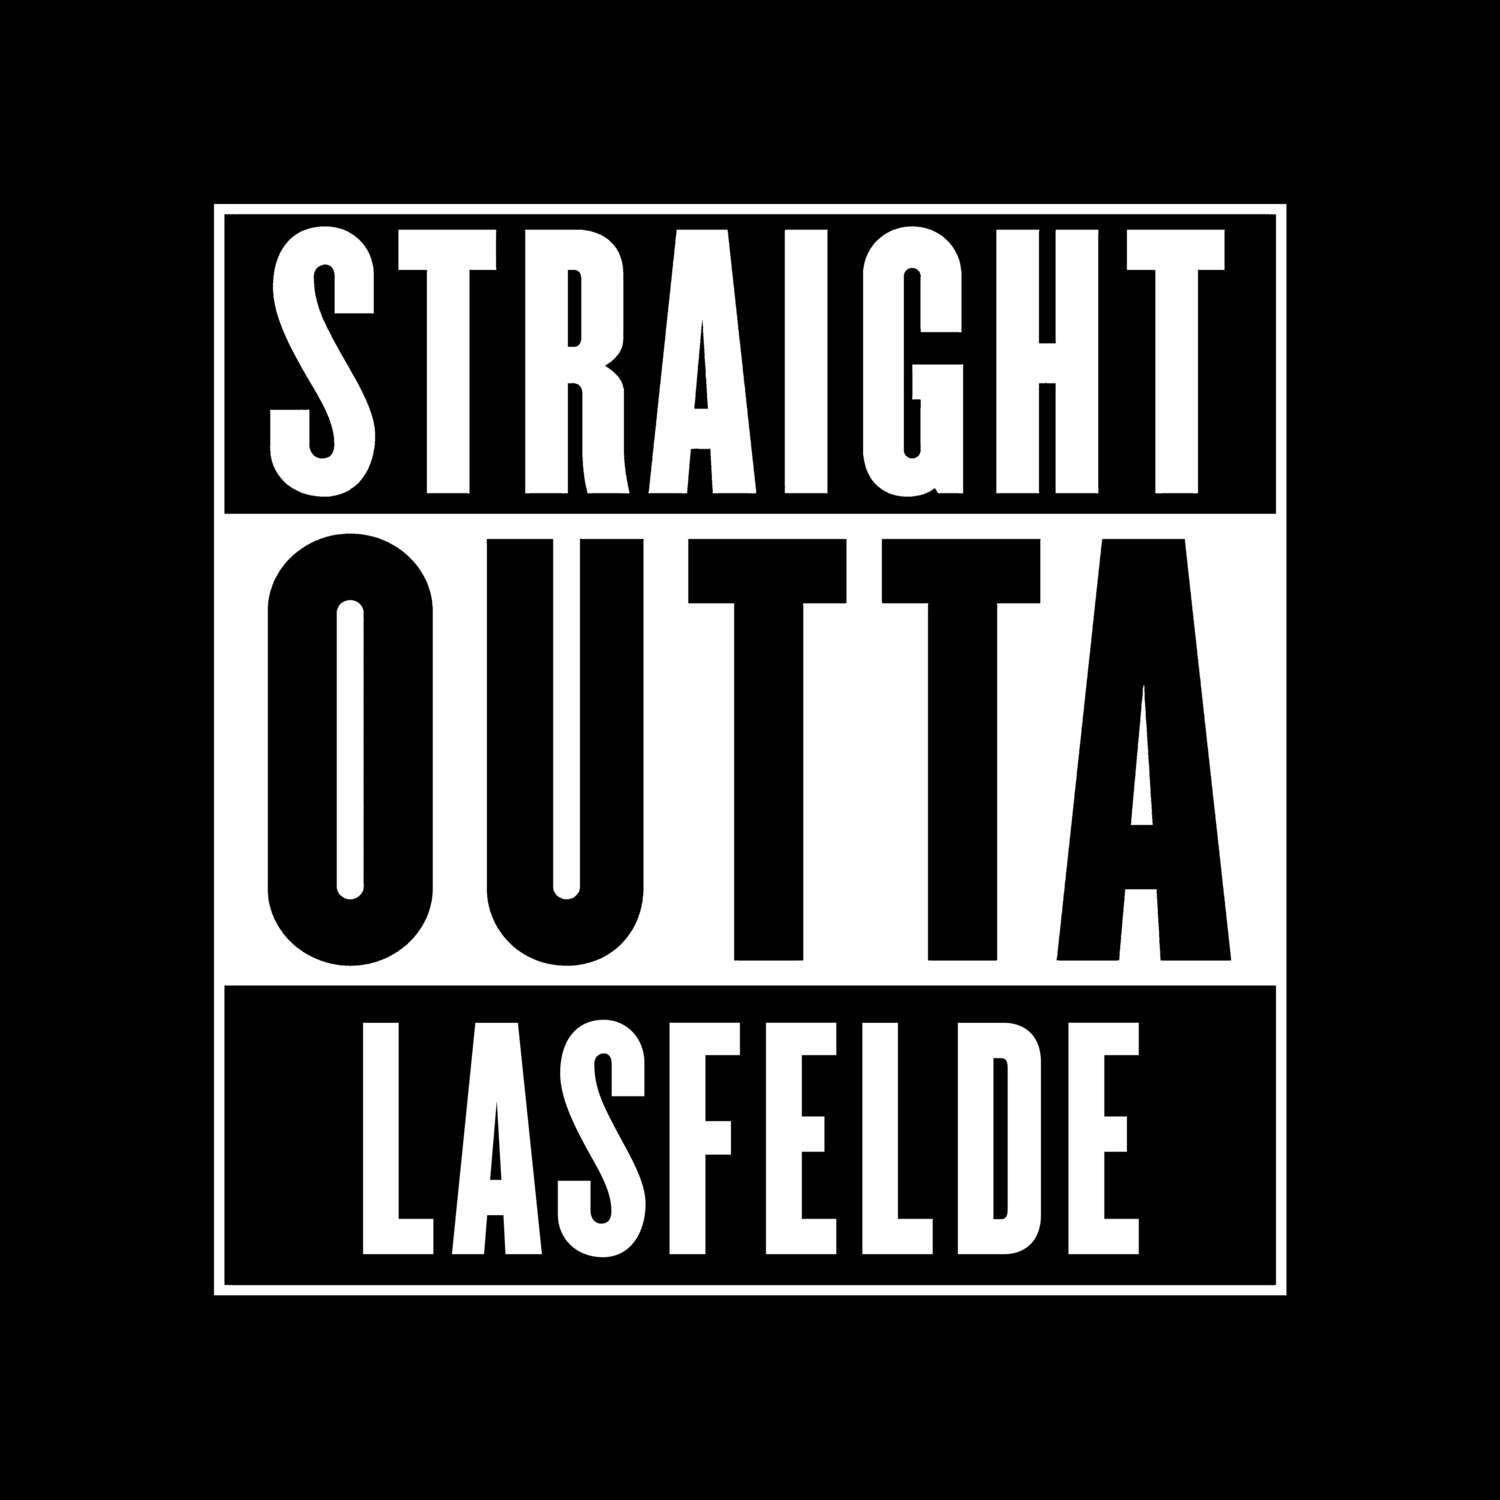 Lasfelde T-Shirt »Straight Outta«